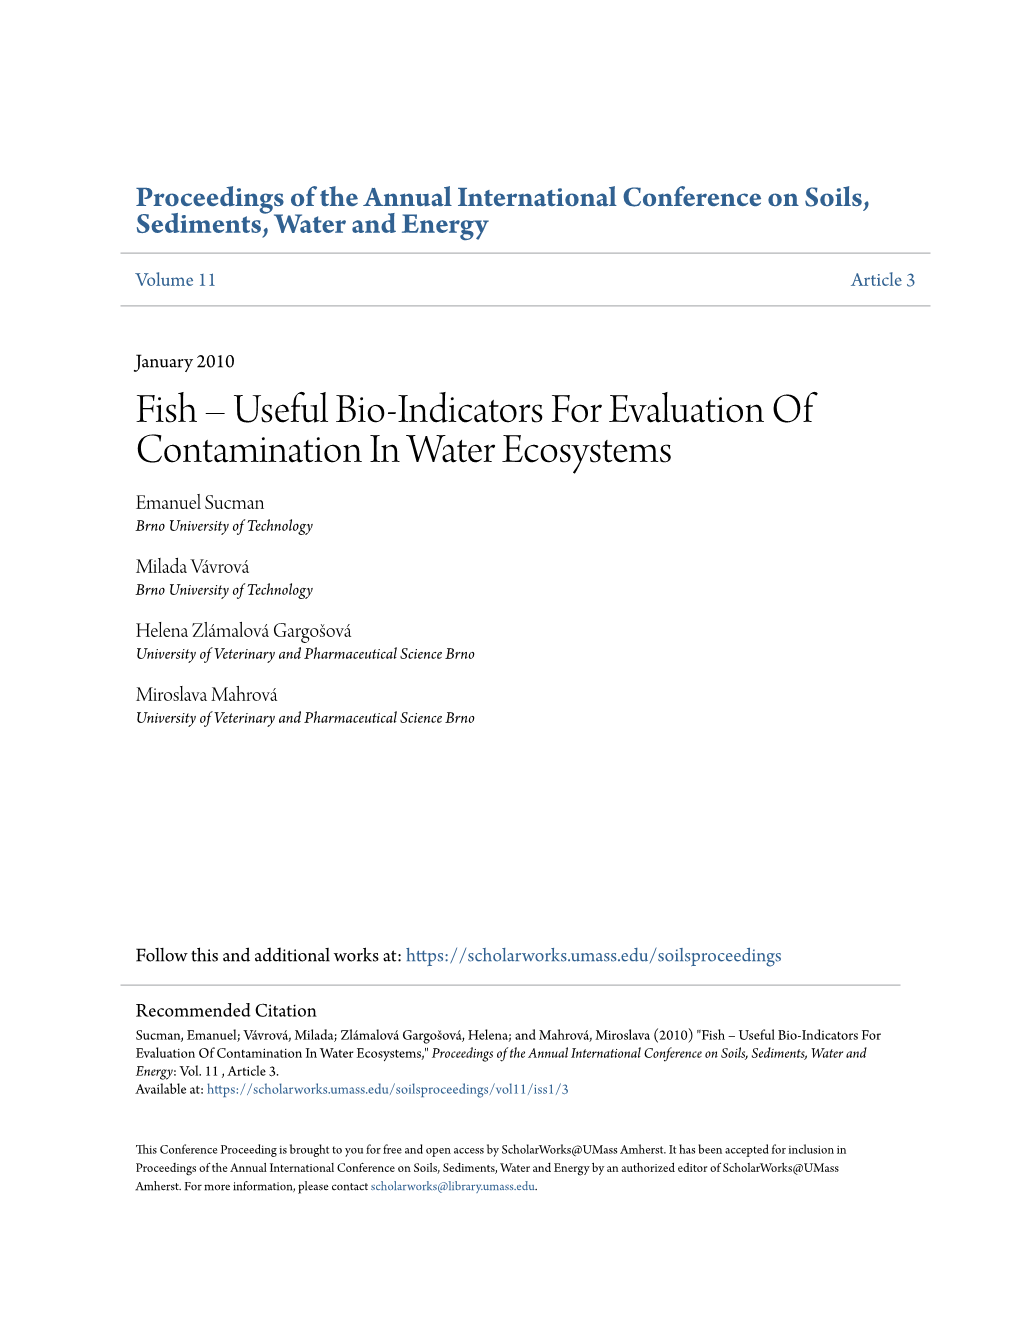 Fish – Useful Bio-Indicators for Evaluation of Contamination in Water Ecosystems Emanuel Sucman Brno University of Technology